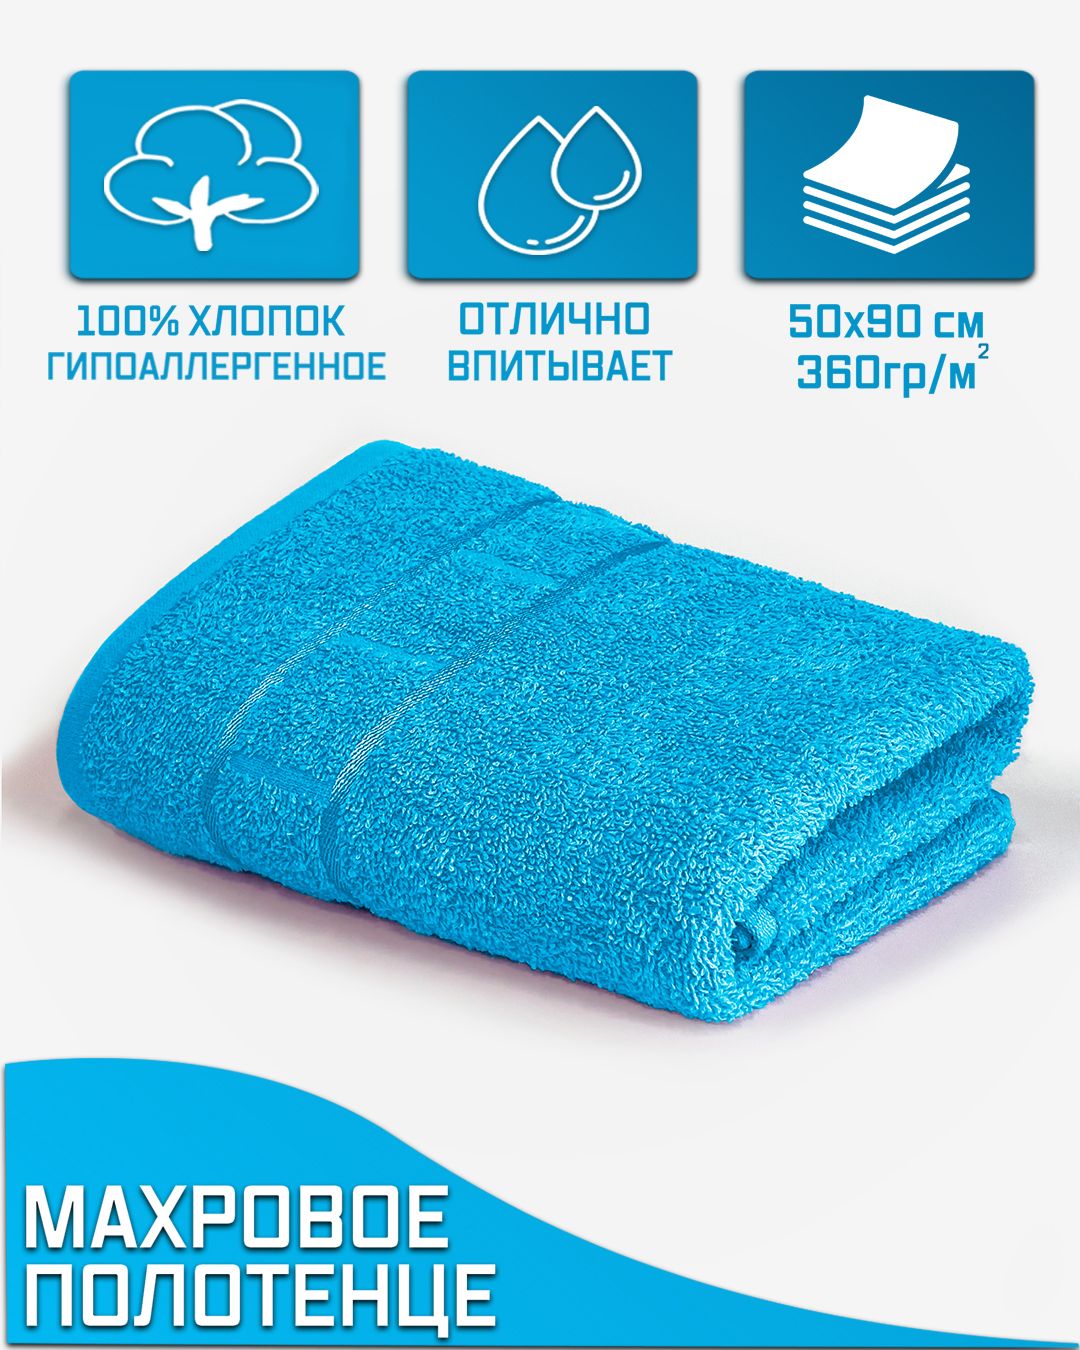 Озон полотенца для ванной. Озон полотенца махровые. Озон полотенца. Озон полотенца для ванной, лица и рук. Озон полотенца для кухни.